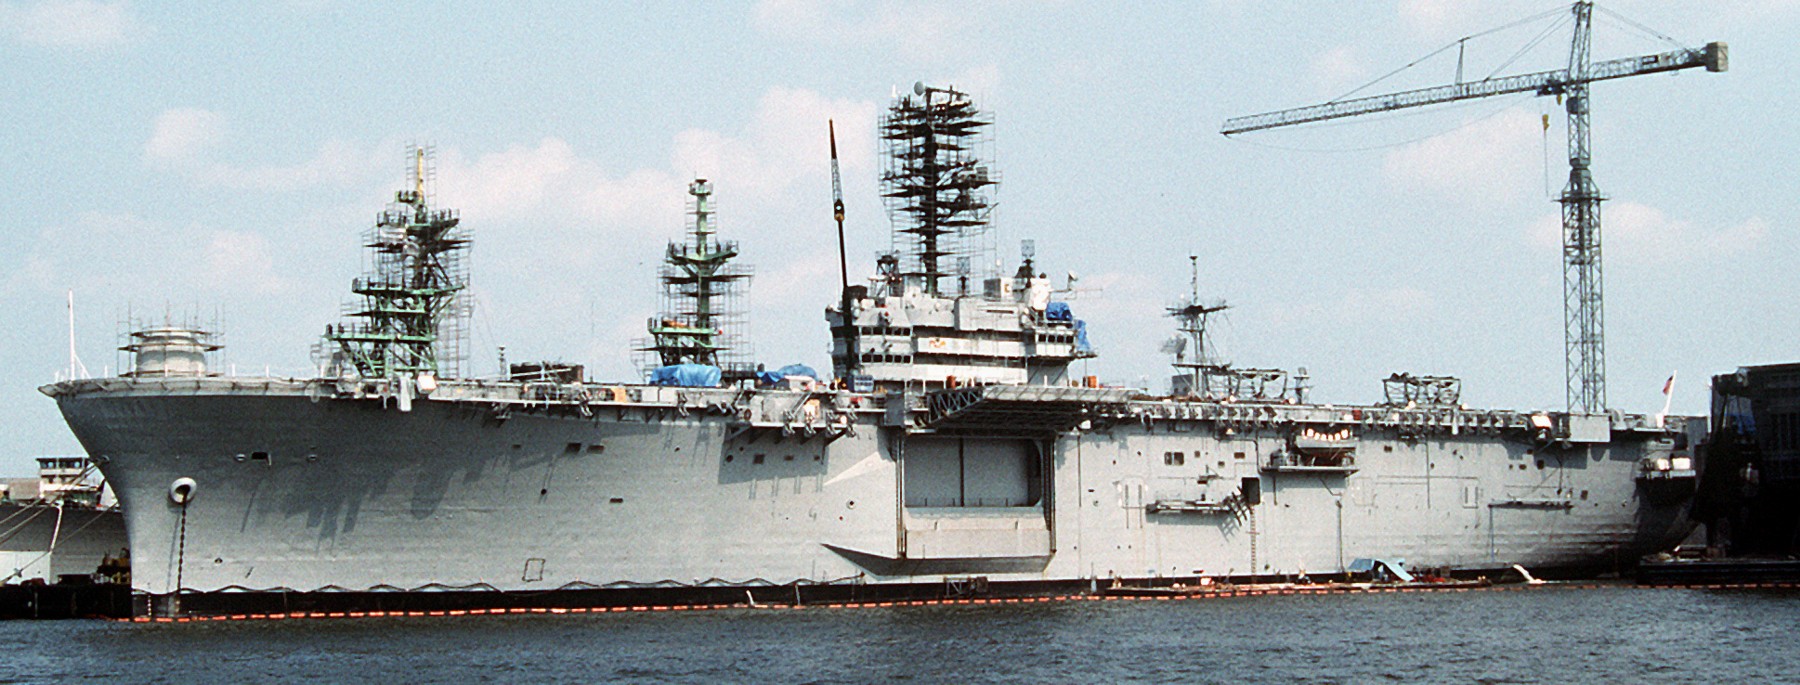 lph-2 uss iwo jima class amphibious assault ship landing platform helicopter us navy 63 metro machine imperial docks norfolk